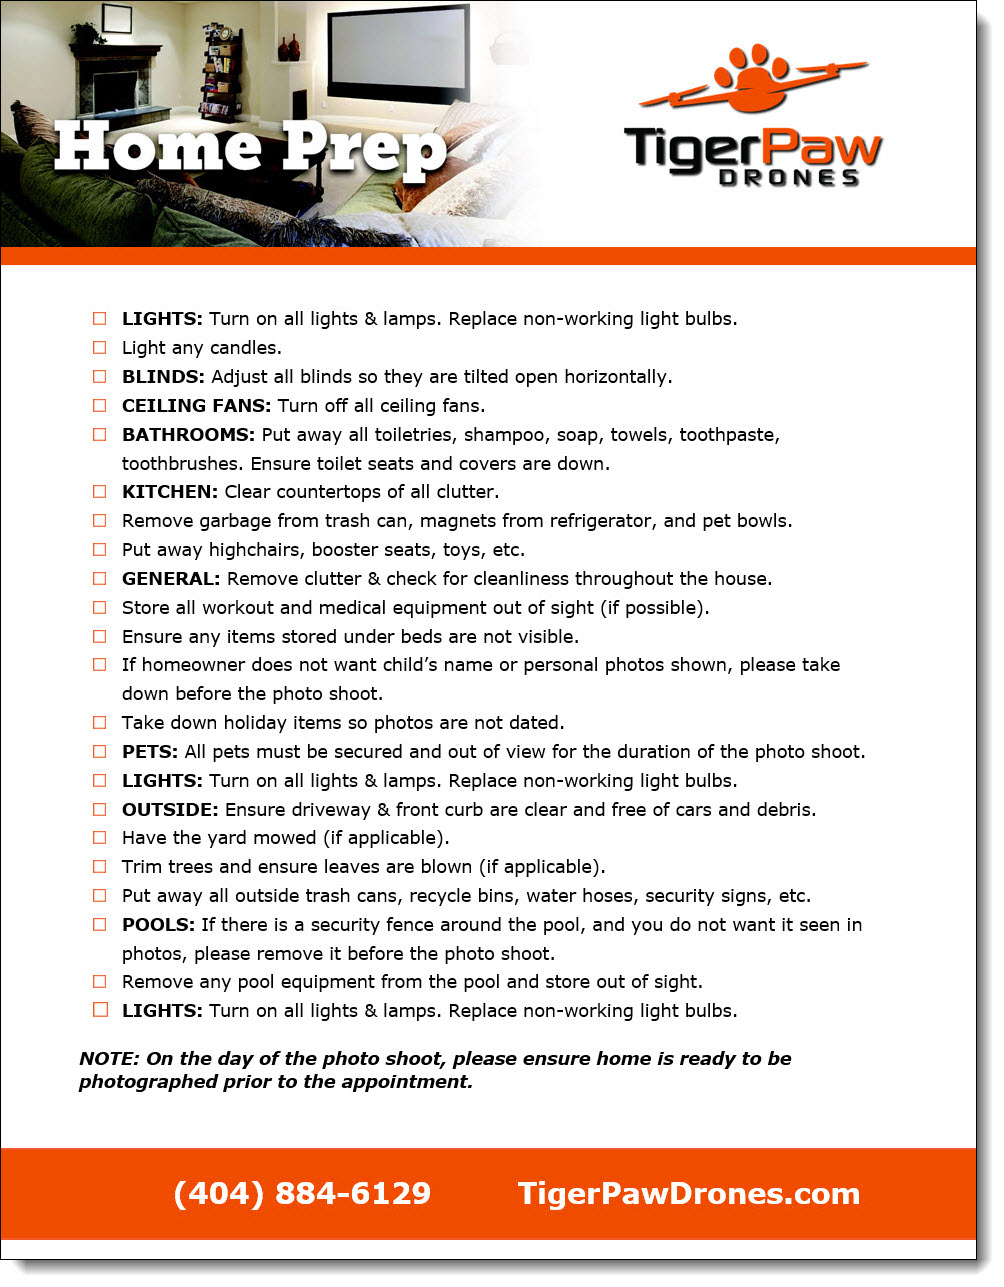 Download Home Prep Checklist